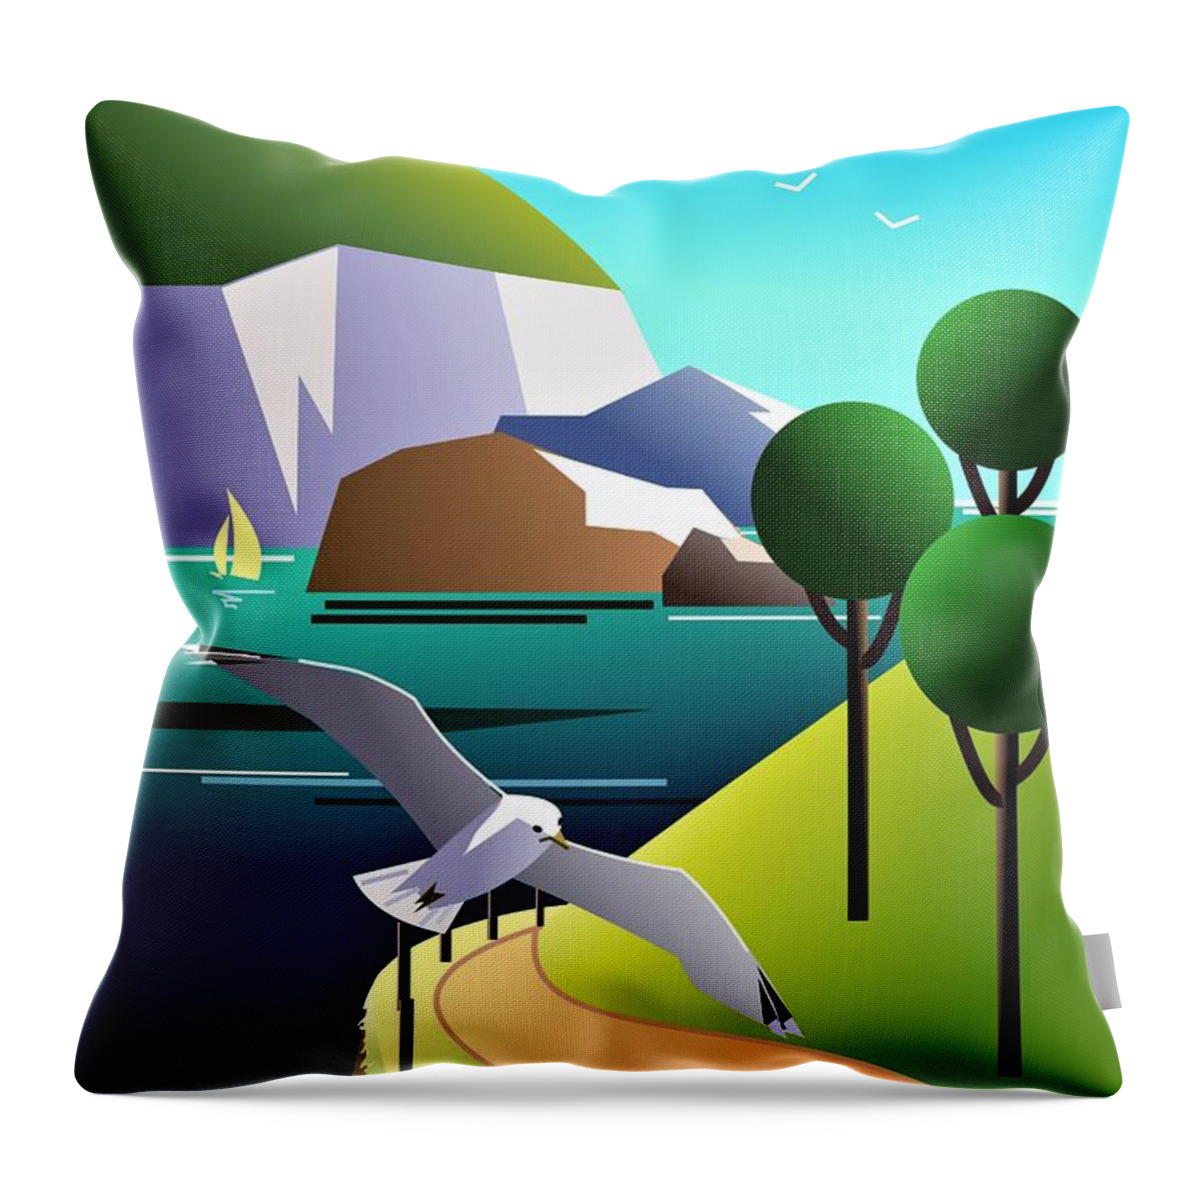 Coast Throw Pillow featuring the digital art Coast by Fatline Graphic Art